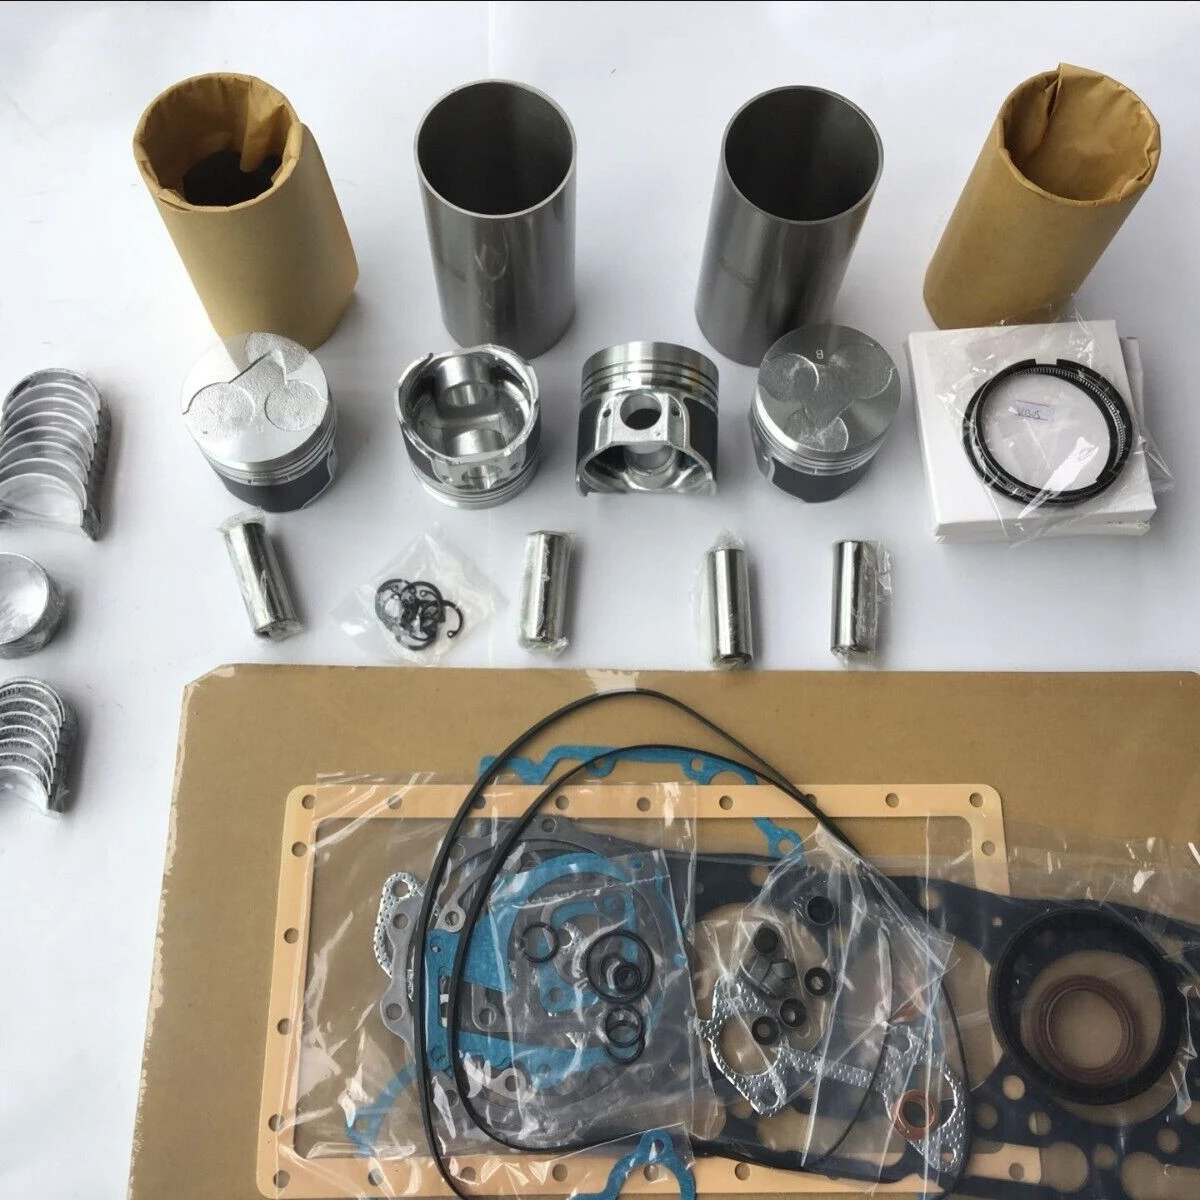 

For kubota rebuild V1305 overhaul kit piston ring cylinder gasket bearing liner